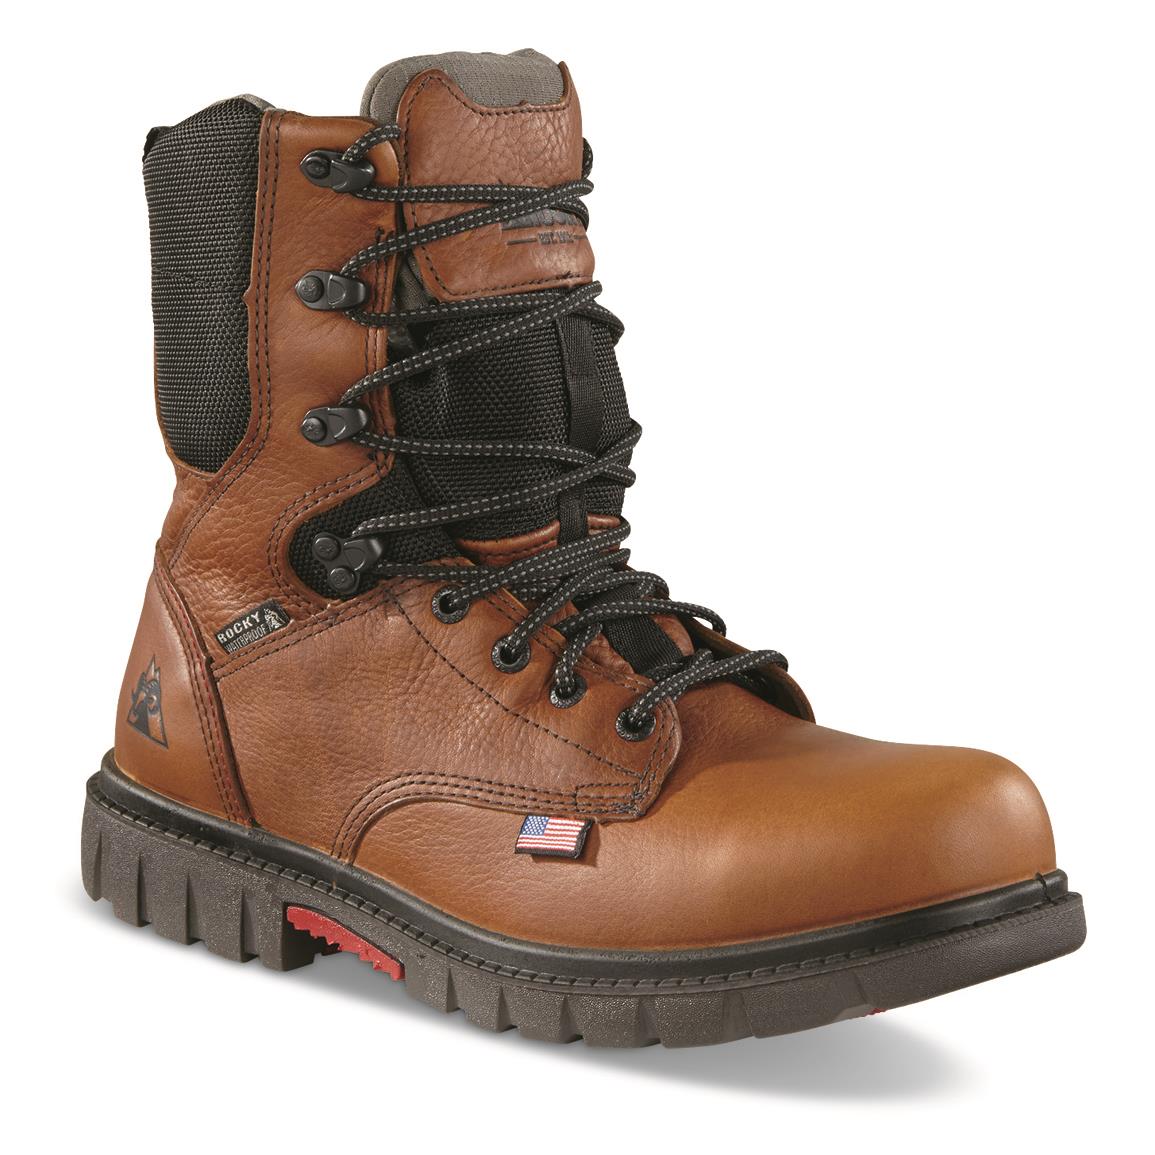 Rocky Men's Worksmart USA 8" Waterproof Safety Toe Work Boots, Brown